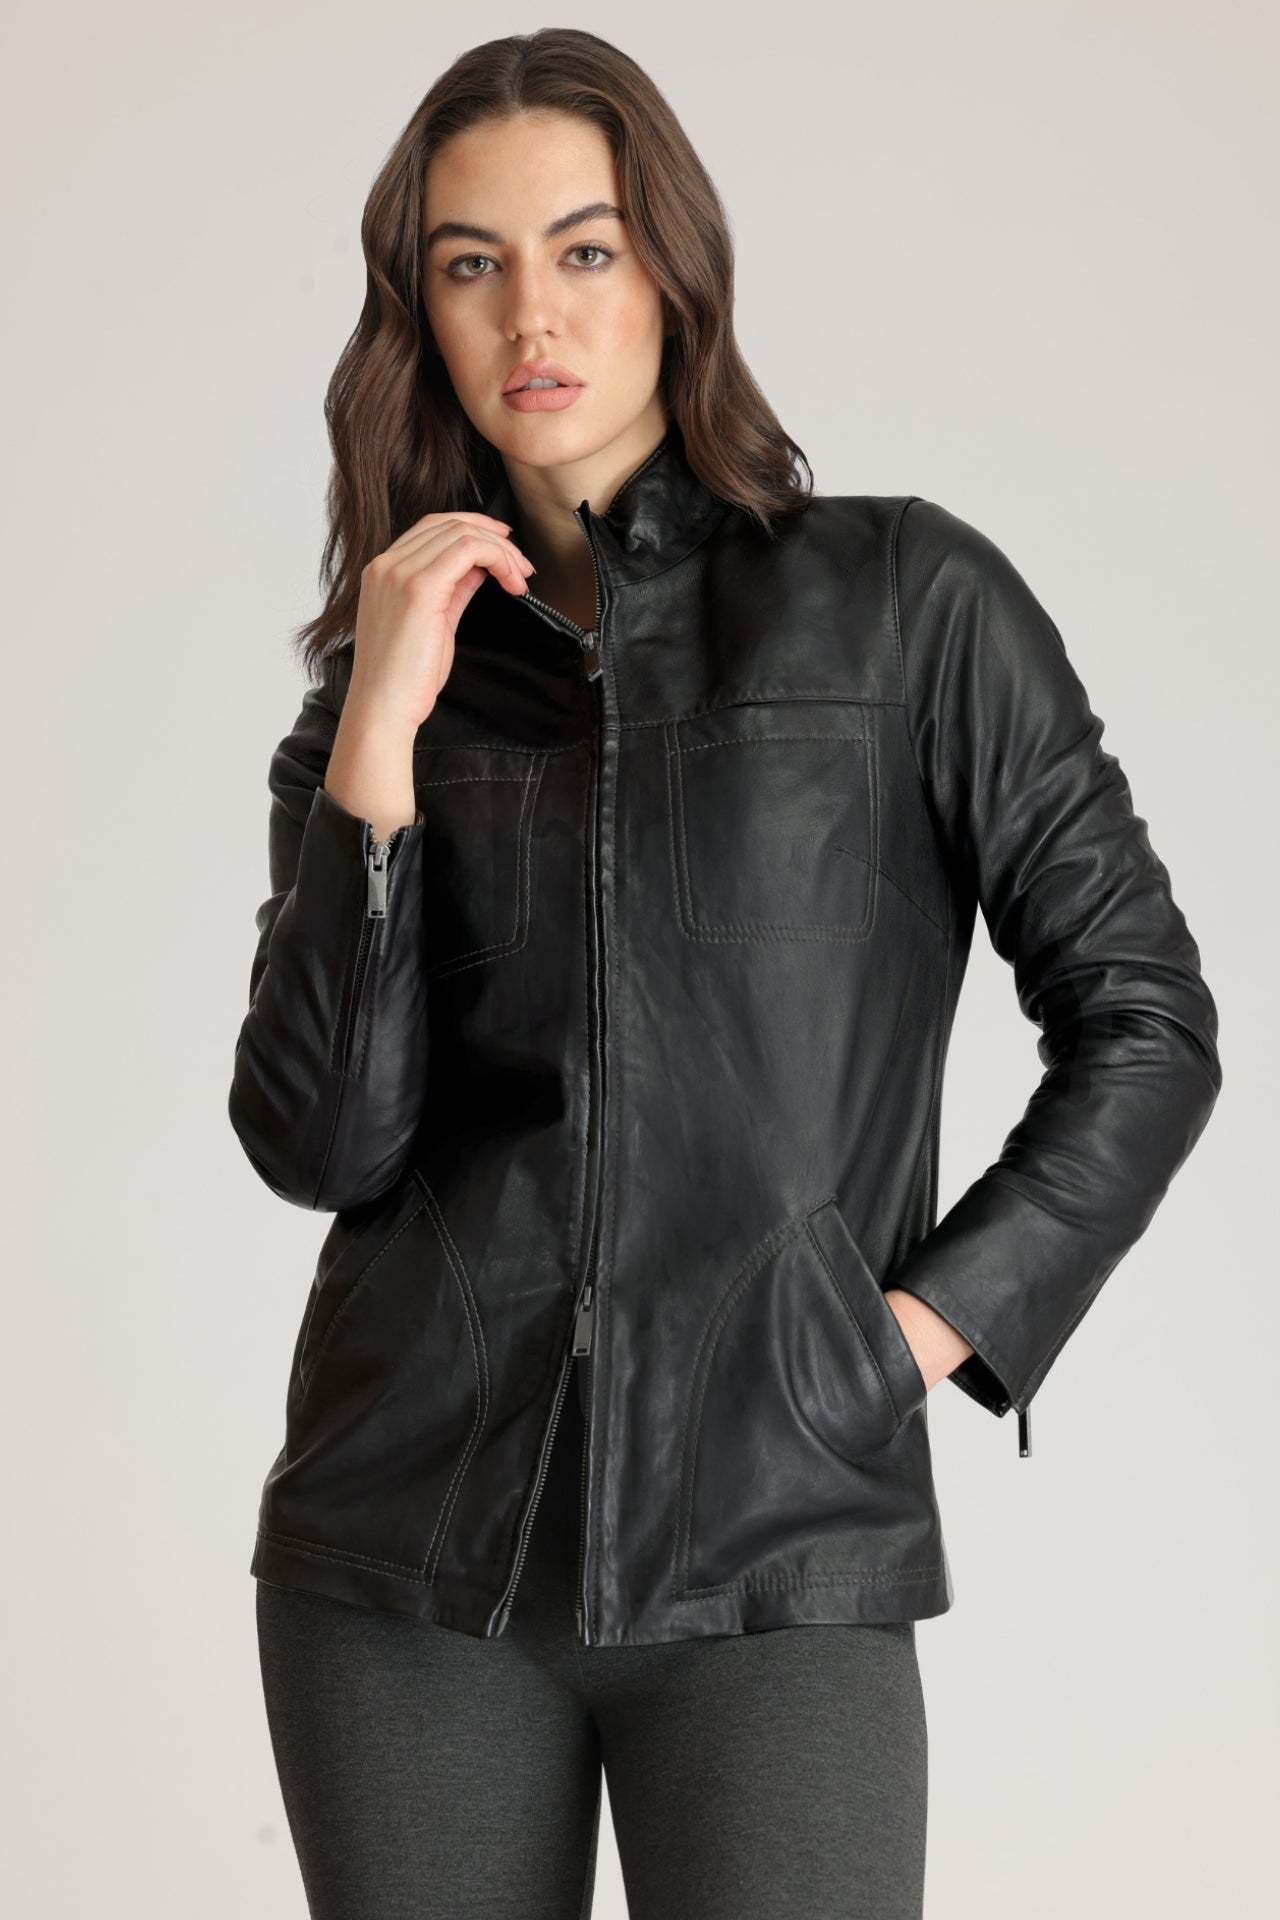 ELLARIA - Womens's Leather Jacket – Danier